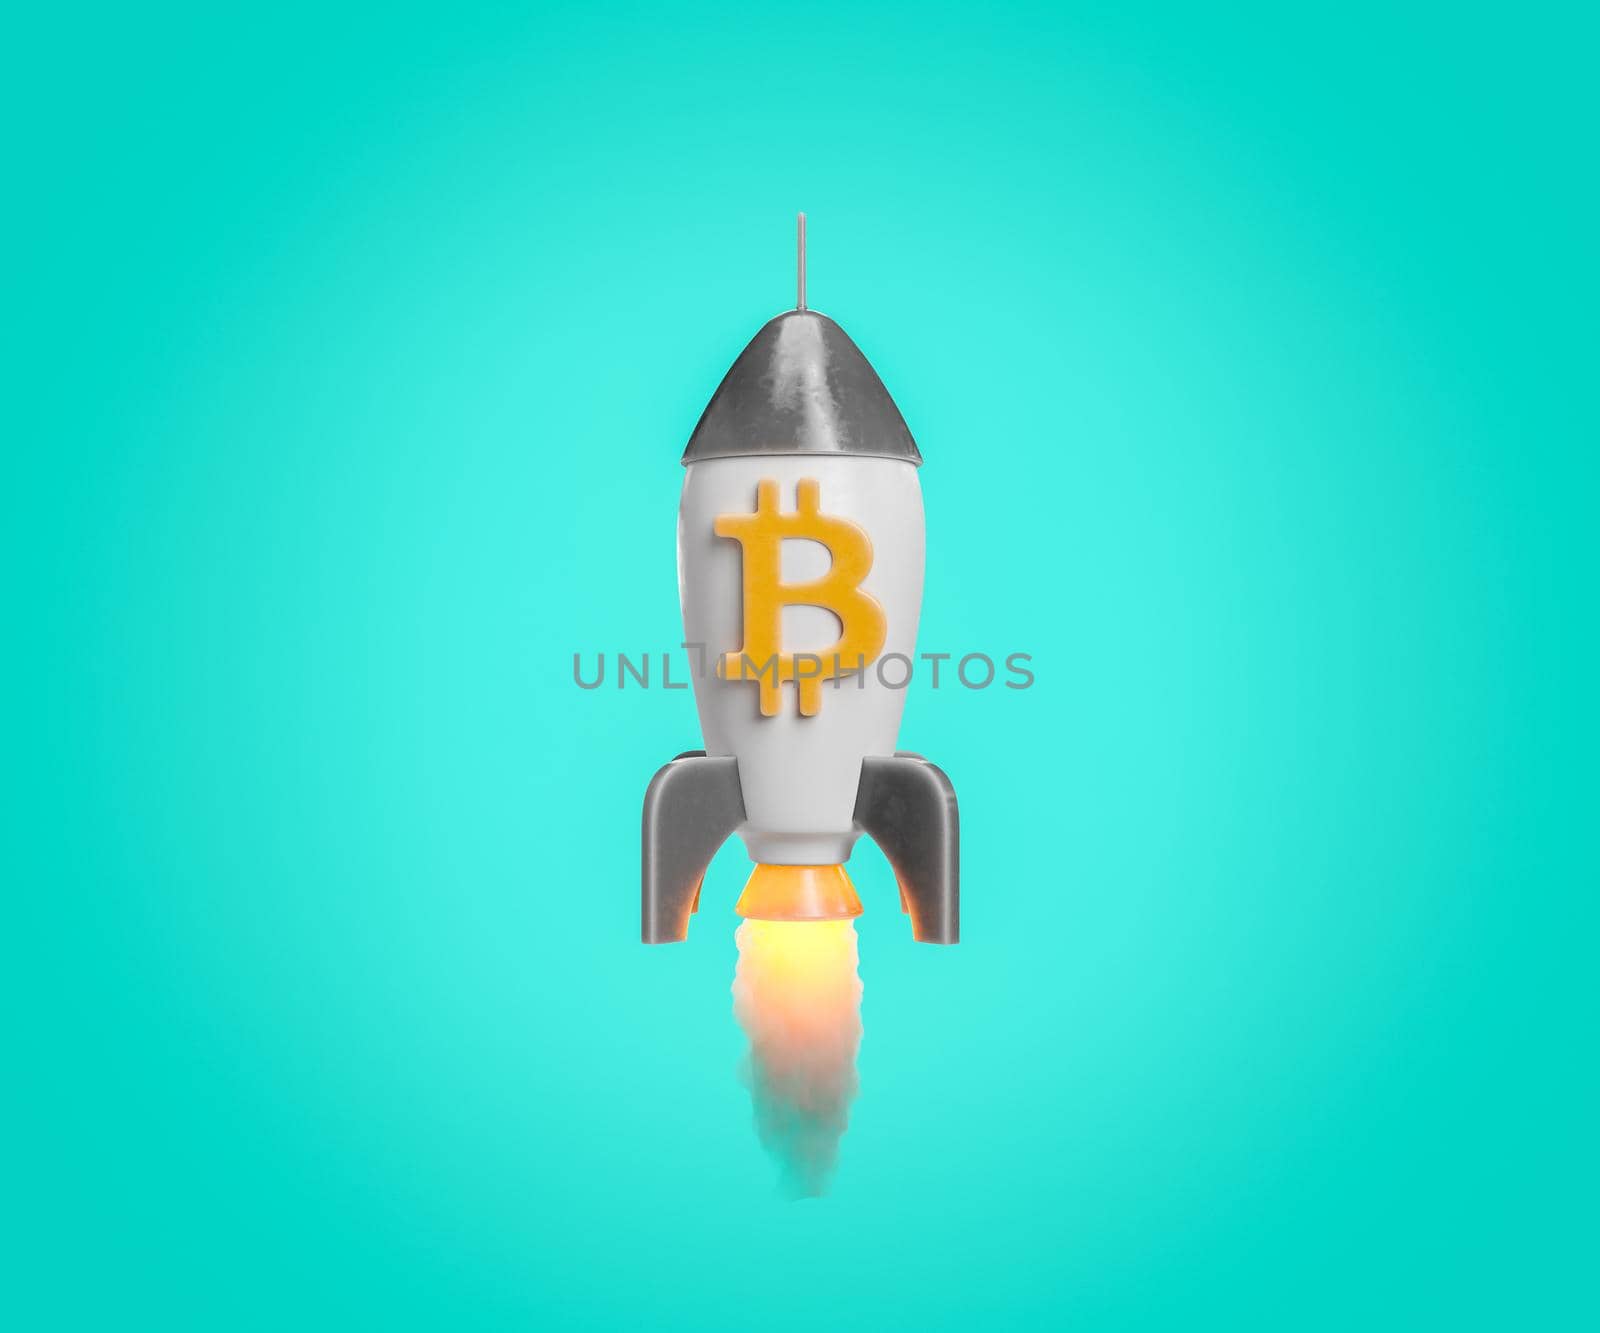 rocket taking with bitcoin symbol by asolano